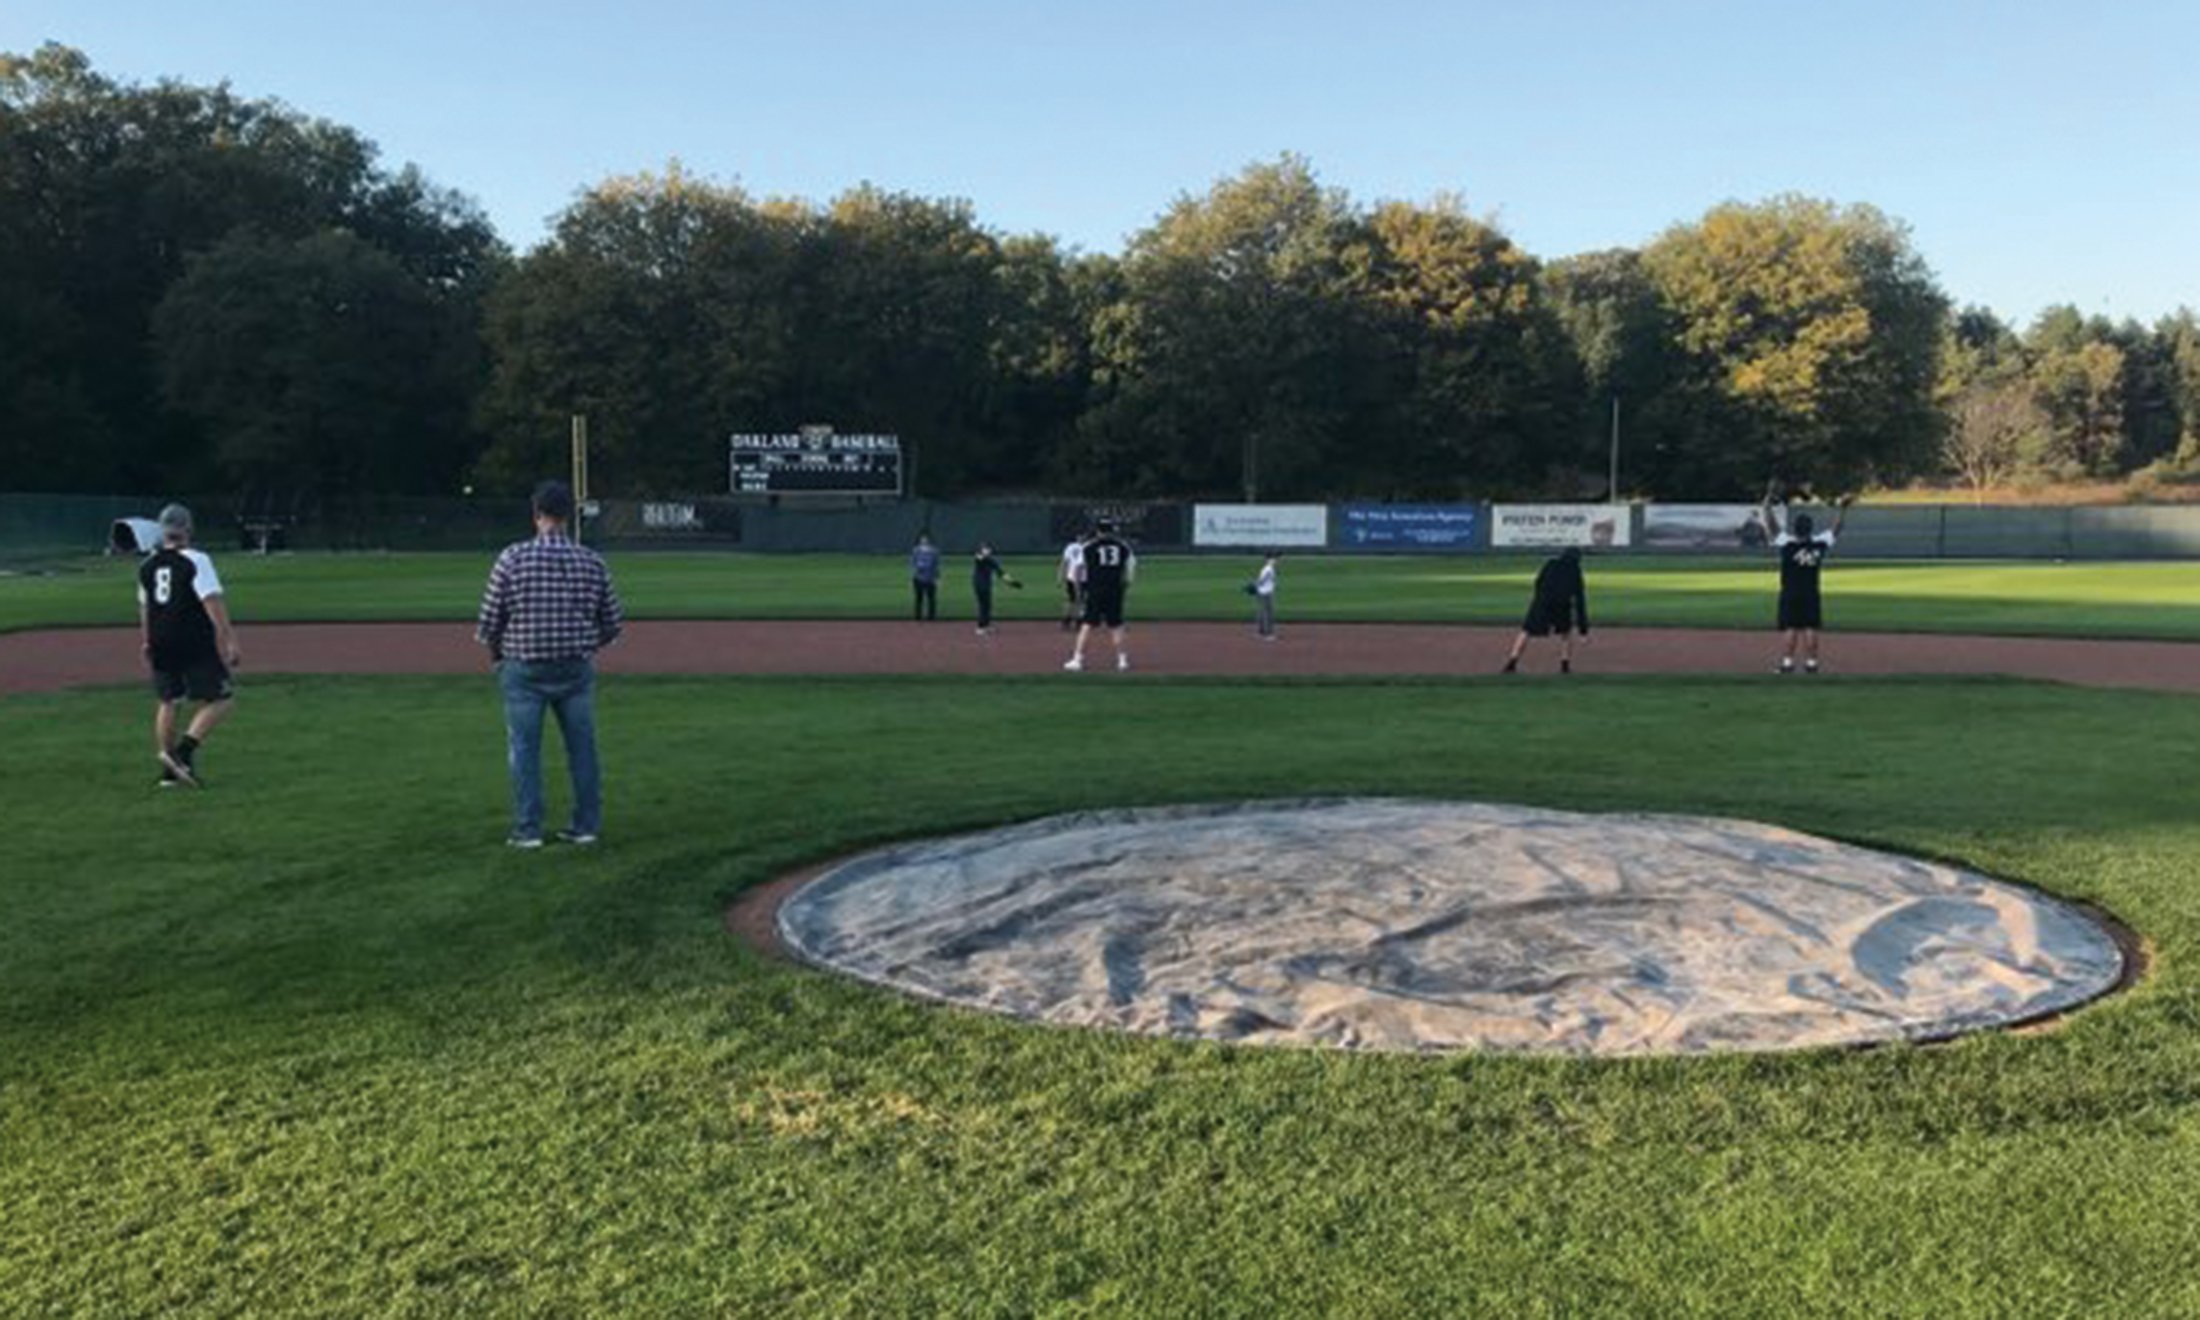 People on a baseball field